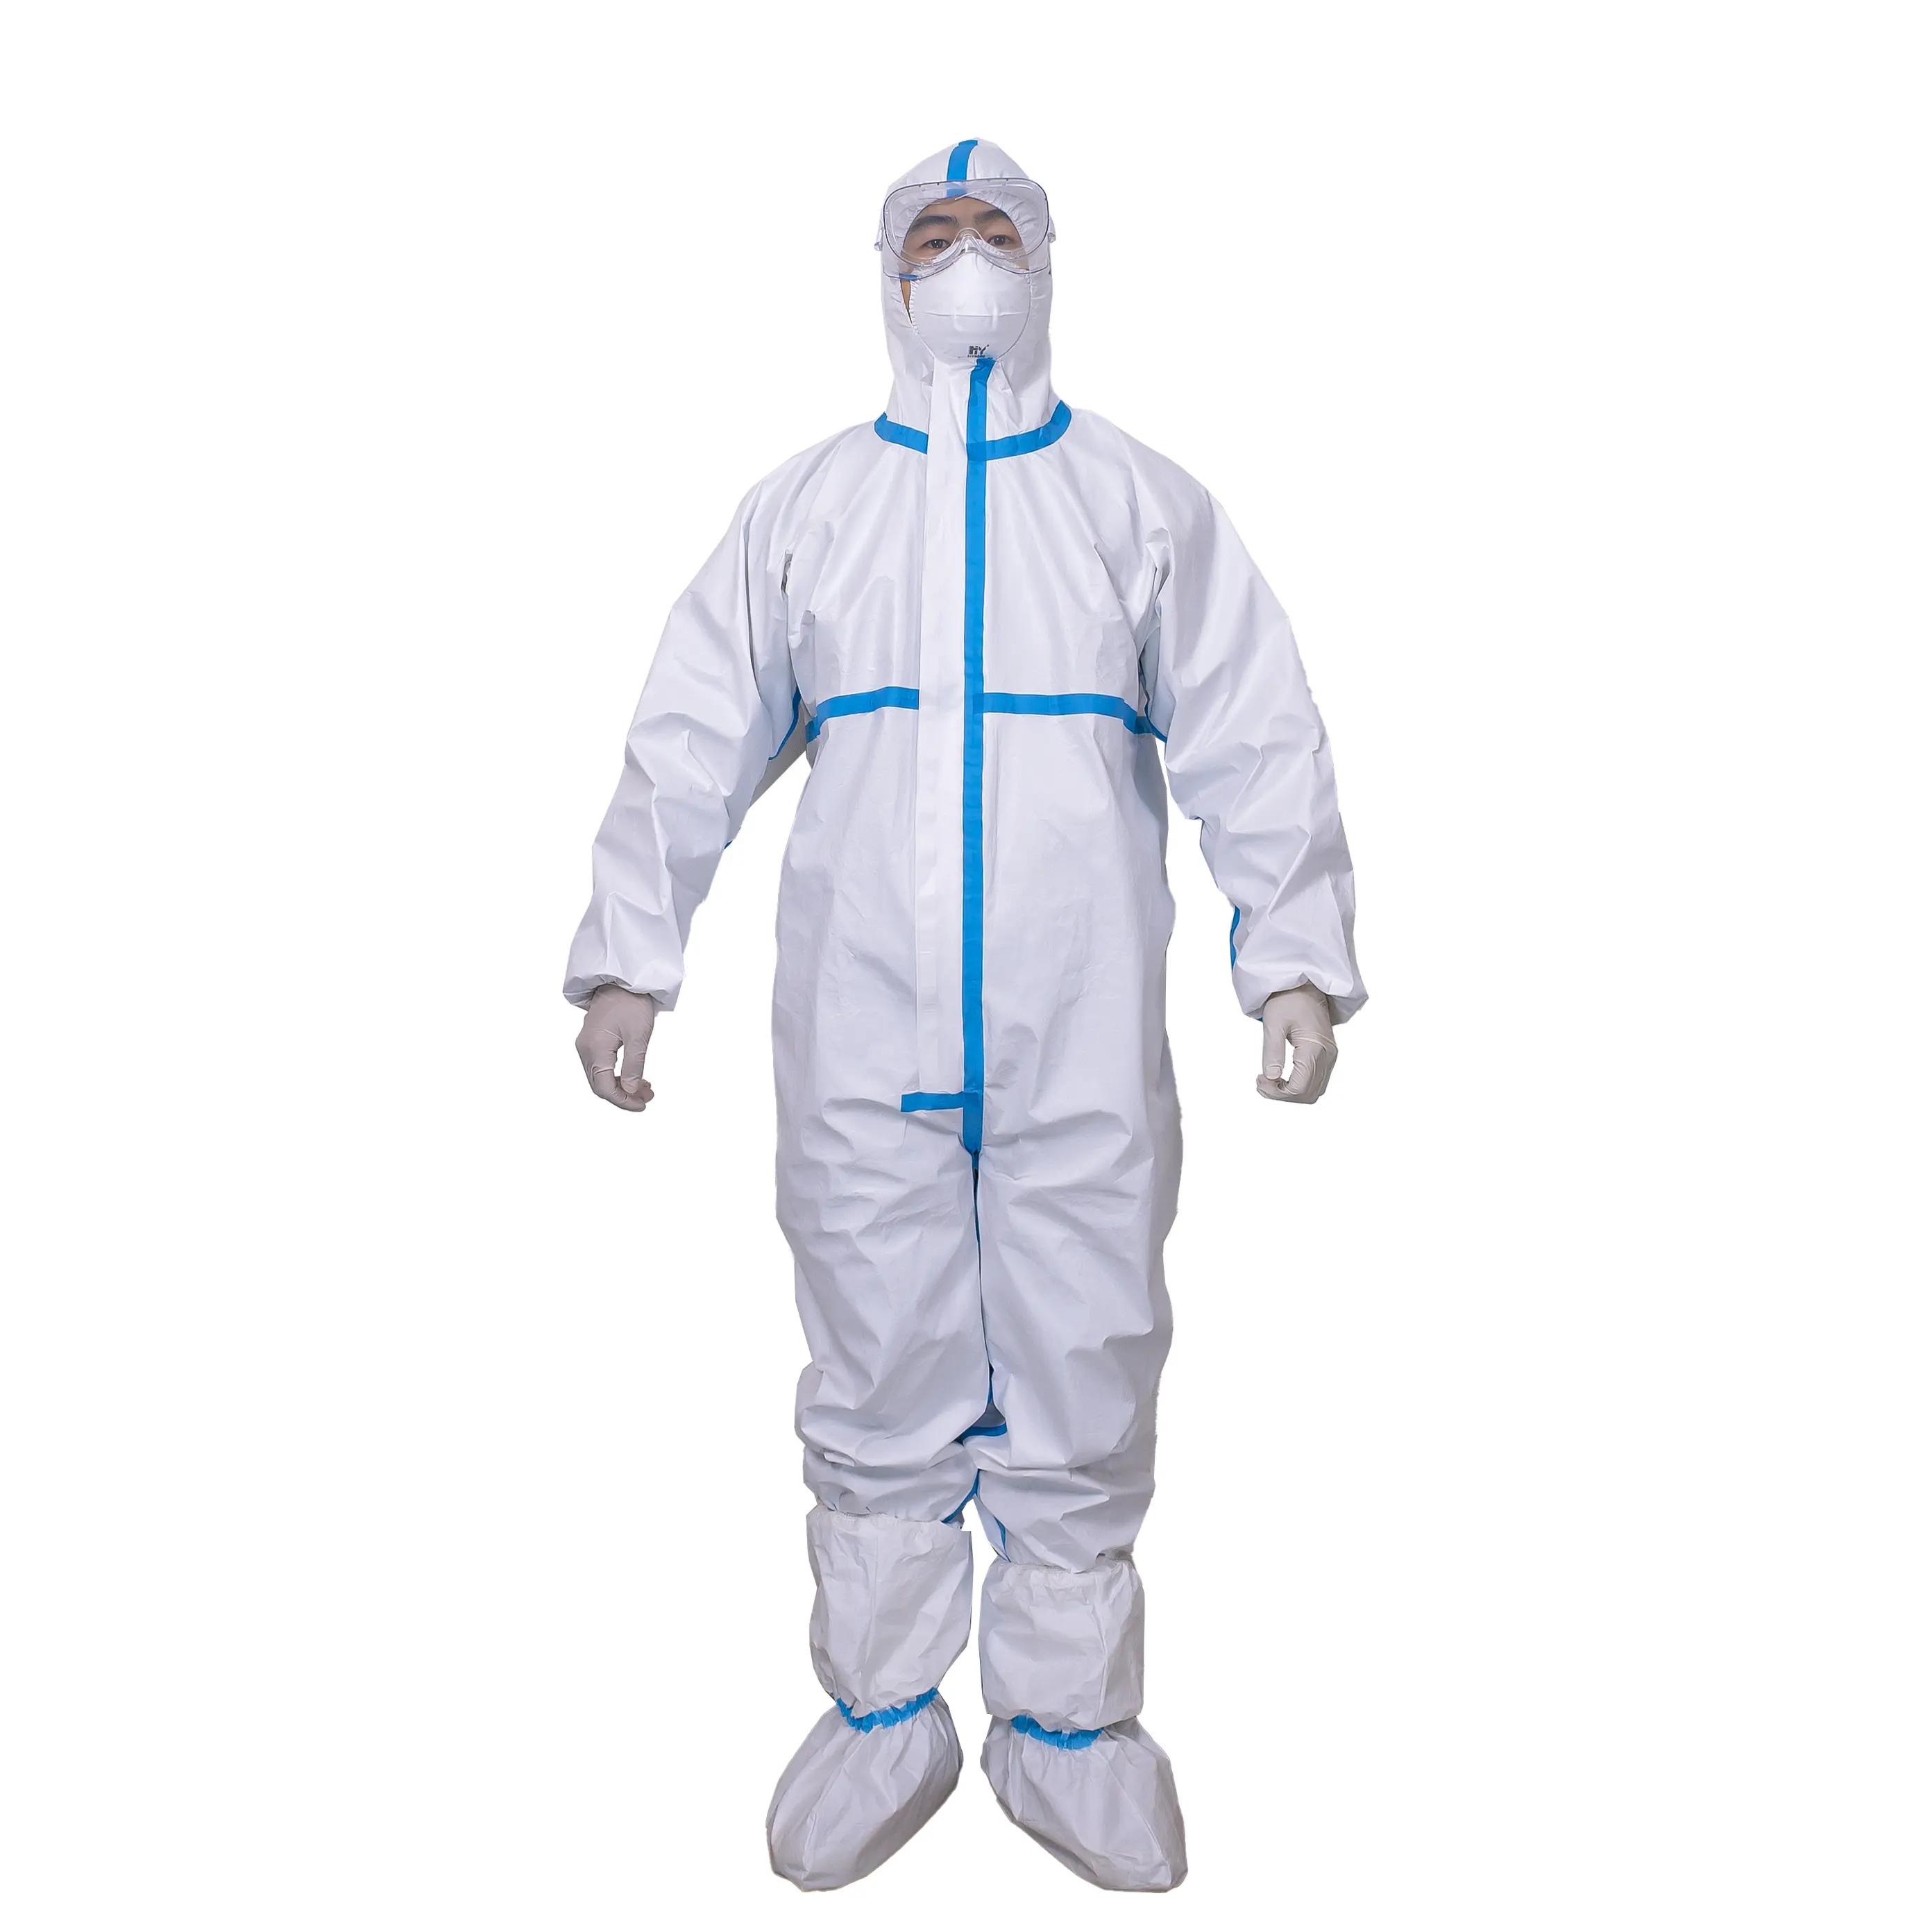 OEMEN13485タイプ6保護Ppeキットスーツカバーオール全体的に使い捨てカバーオール保護服化学保護服